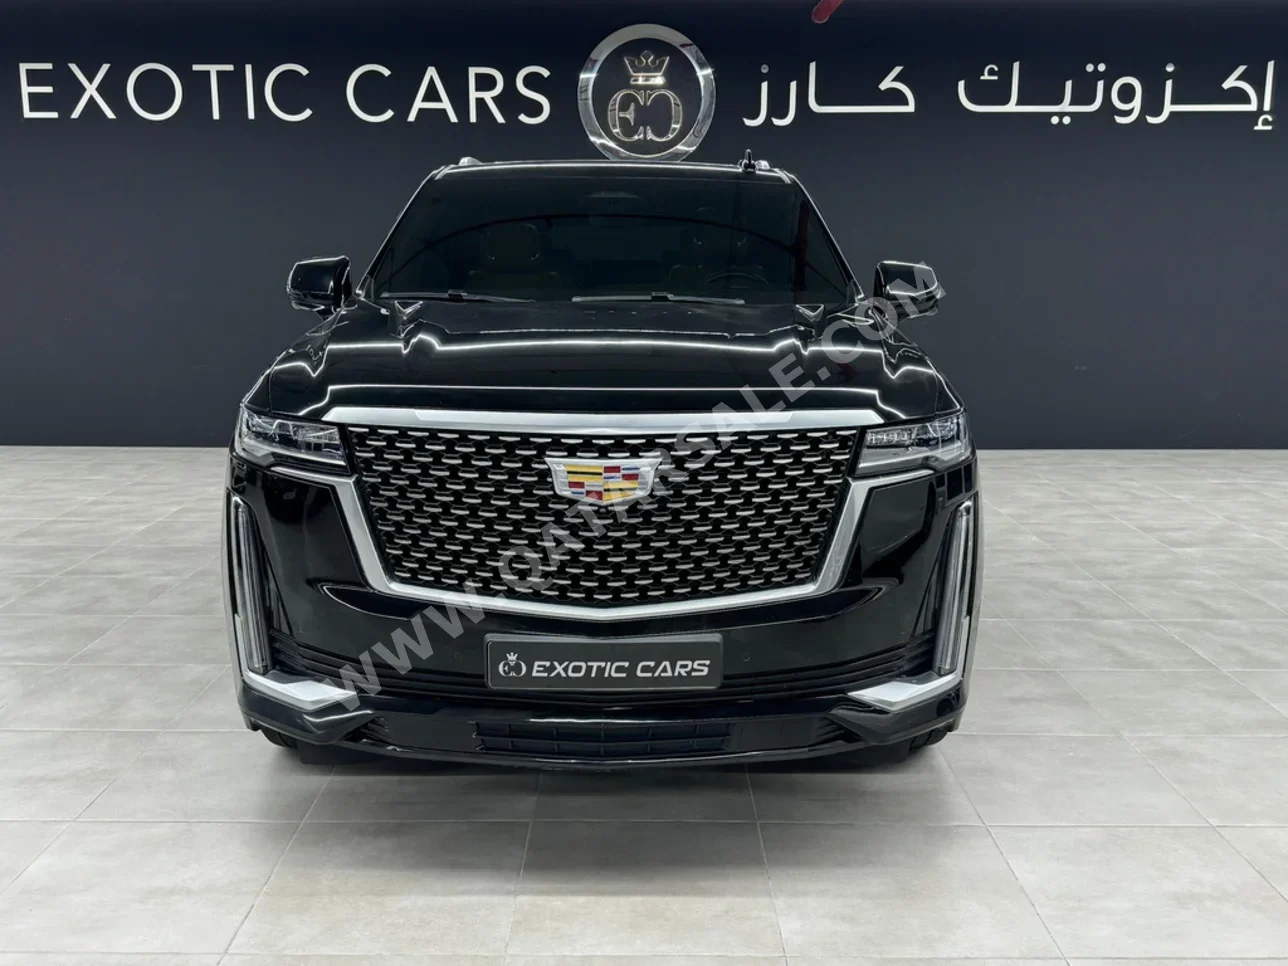 Cadillac  Escalade  Premium  2022  Automatic  44,000 Km  8 Cylinder  Four Wheel Drive (4WD)  SUV  Black  With Warranty